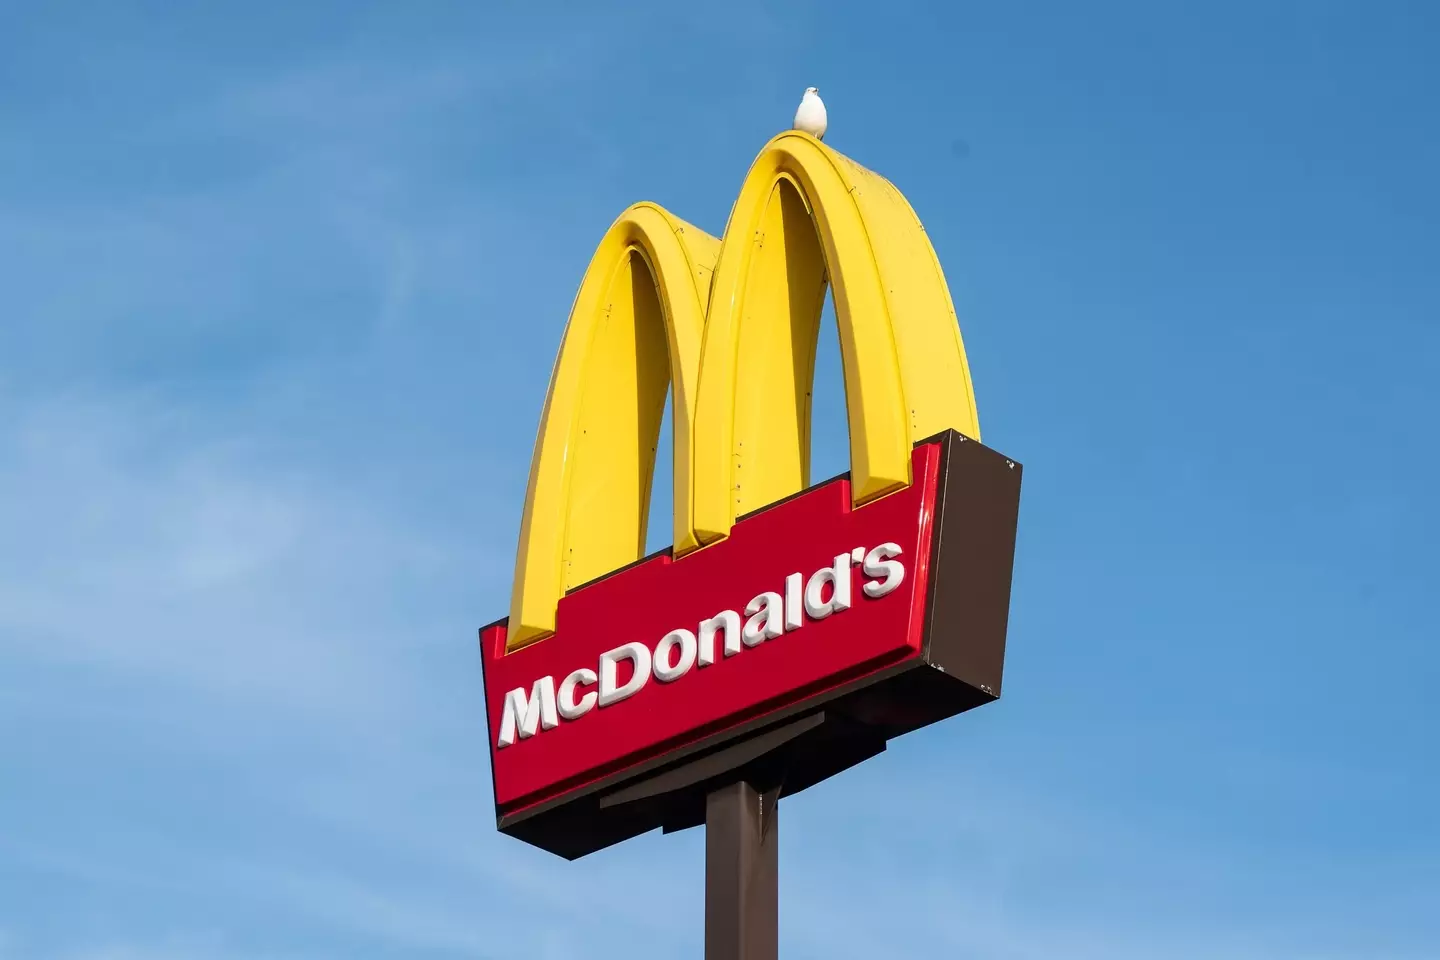 McDonald's made the list of Ward's best restaurants.